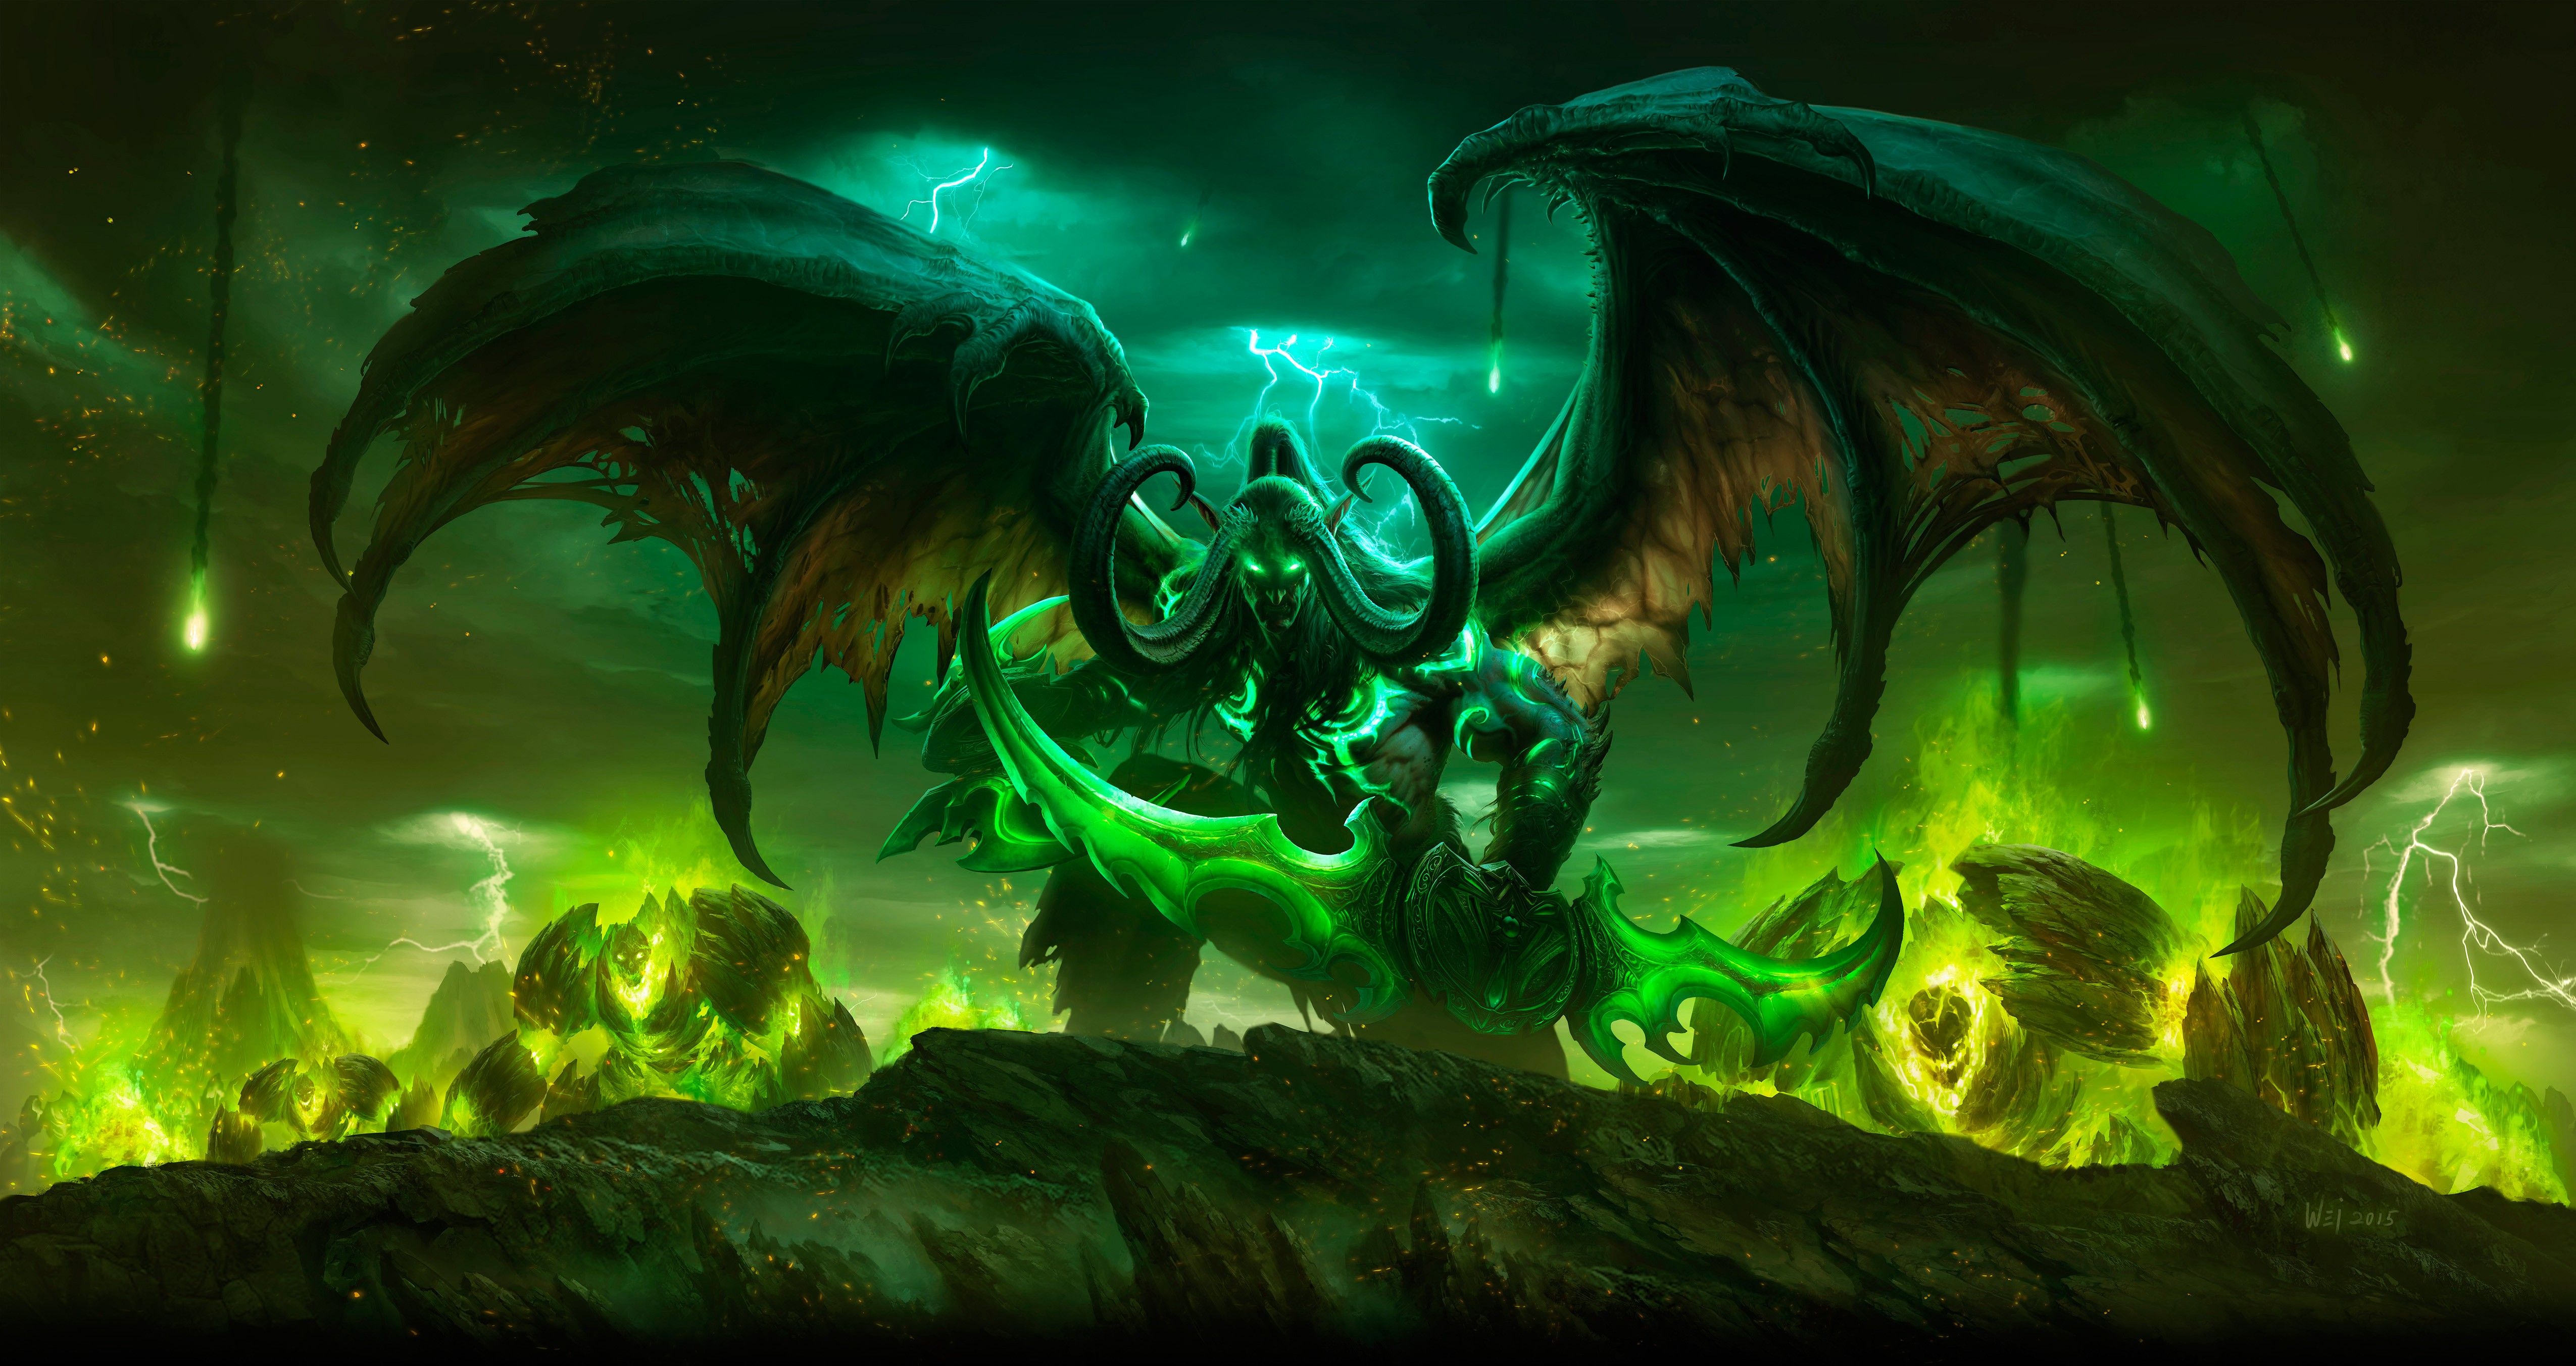 World of Warcraft, Deathwing, Arthas, Gul'dan, Illidan Stomrage